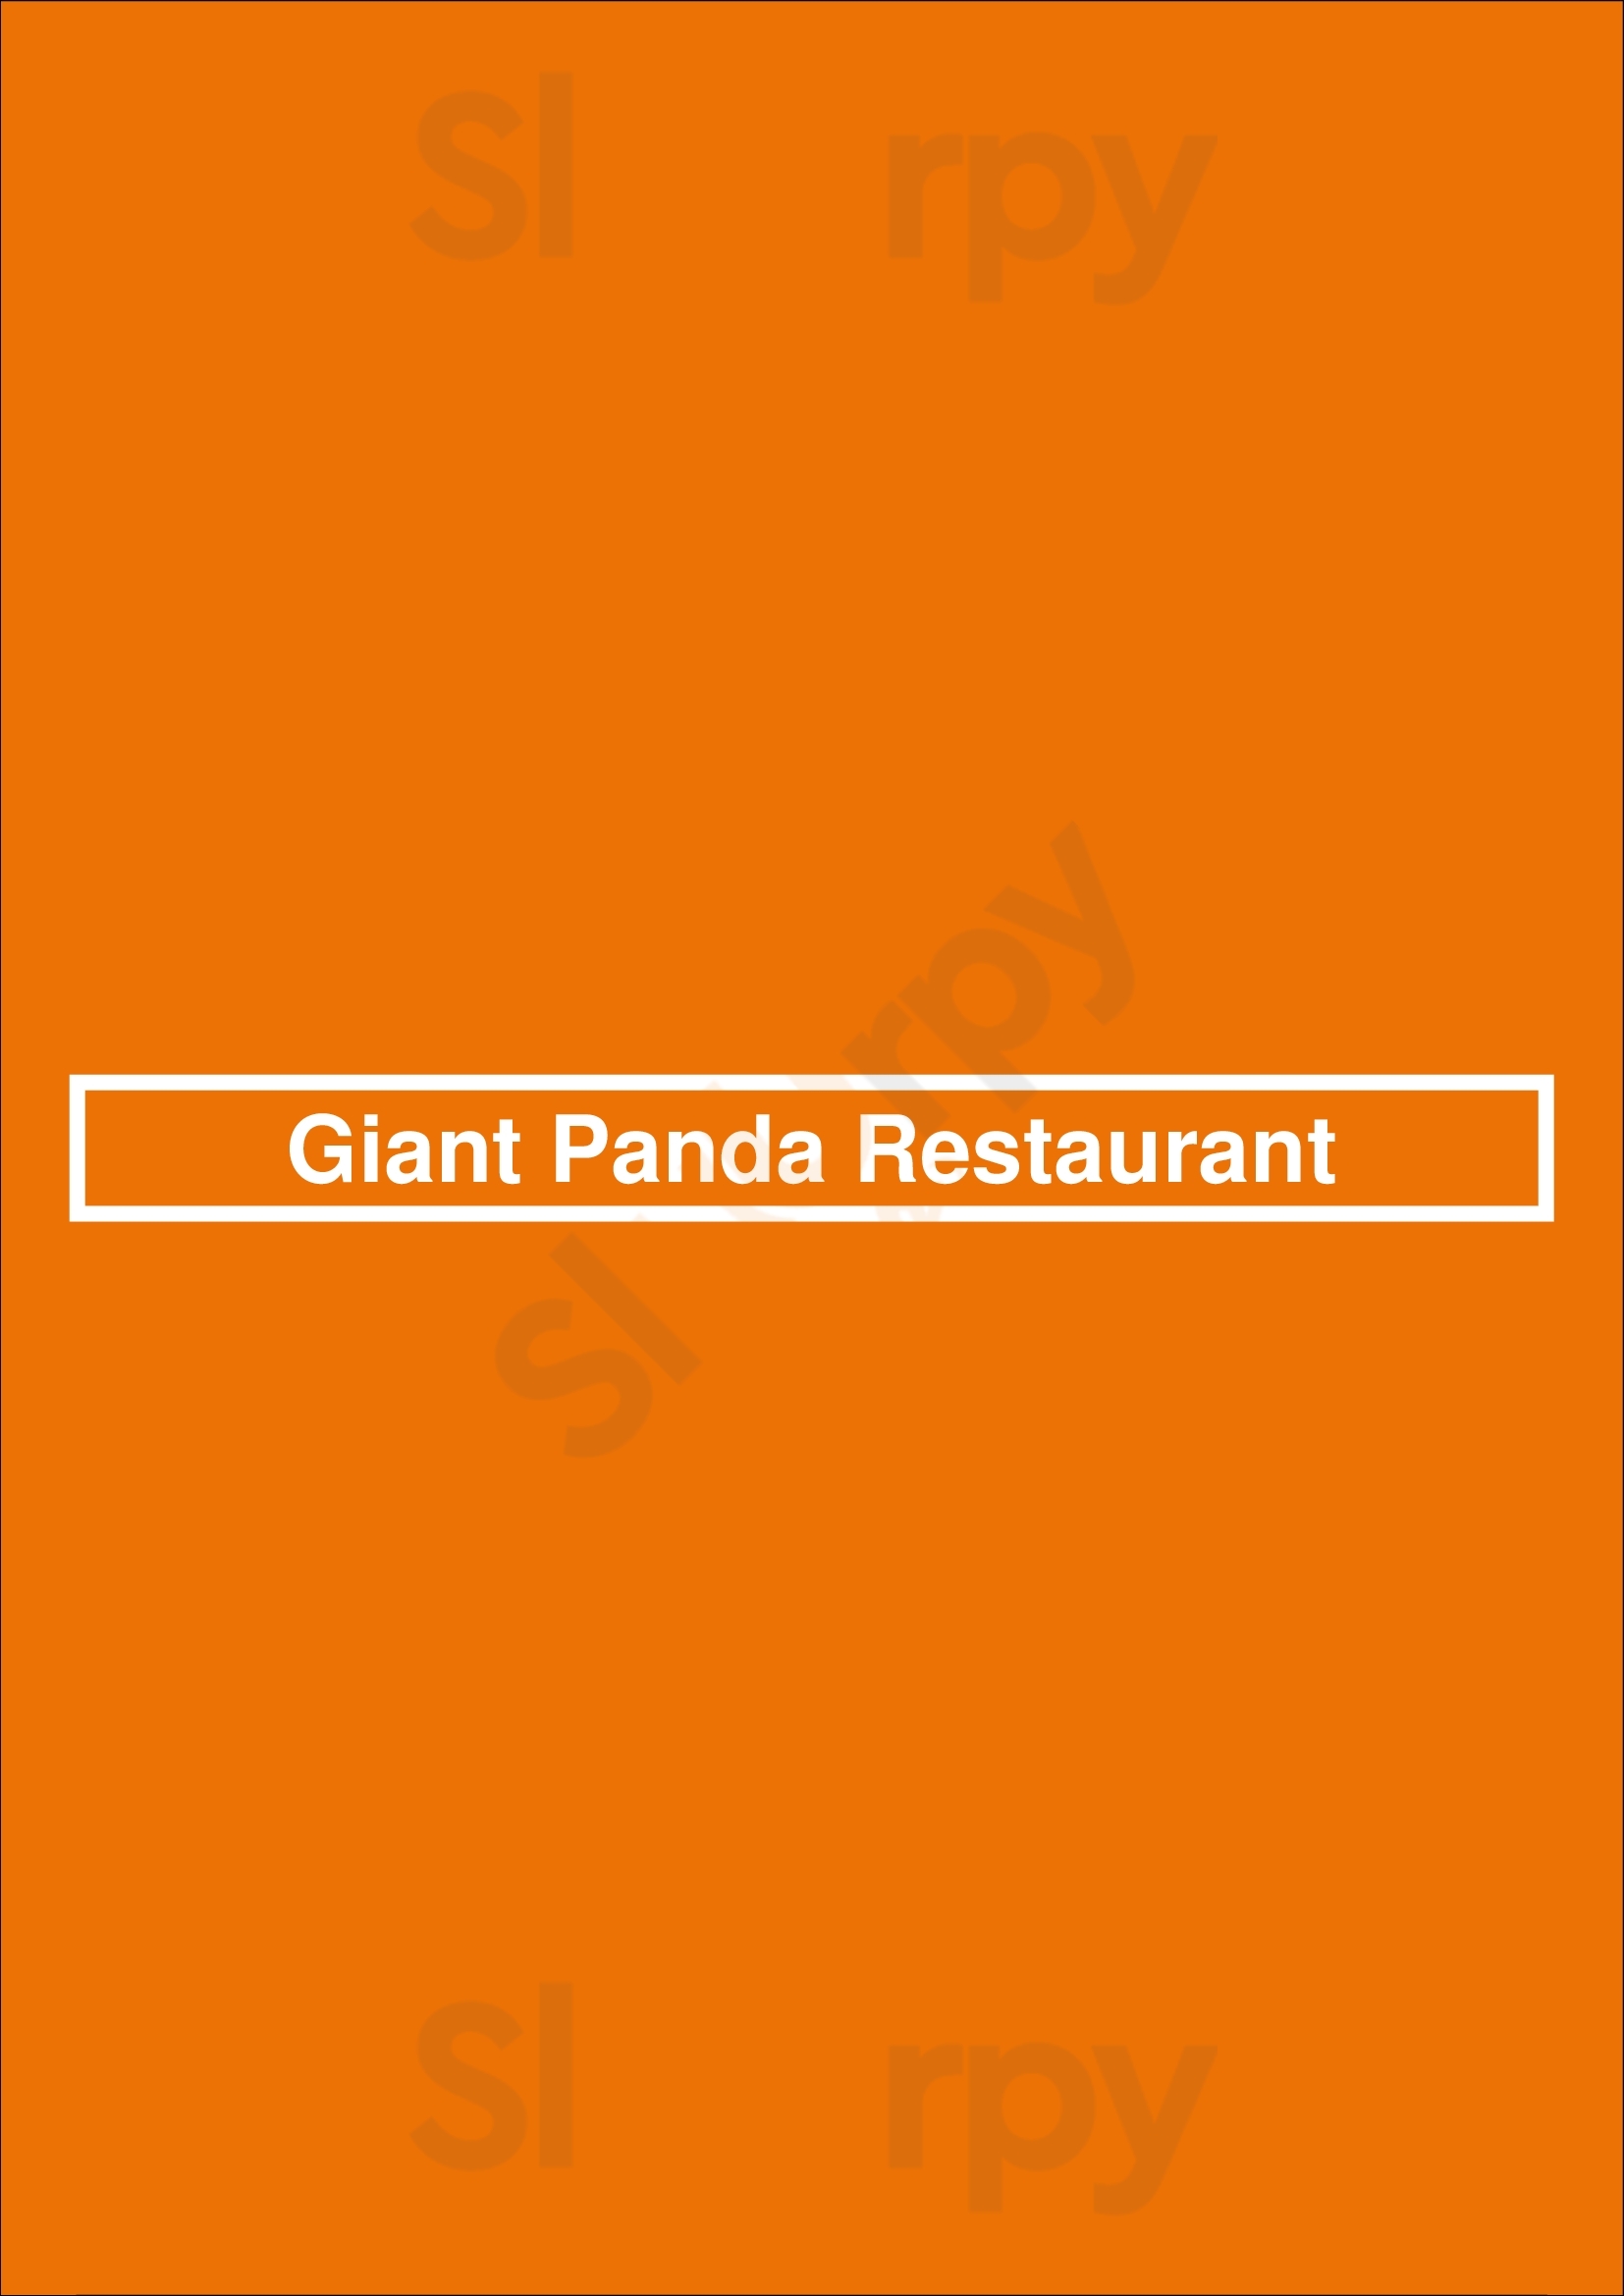 Giant Panda Restaurant Ottawa Menu - 1